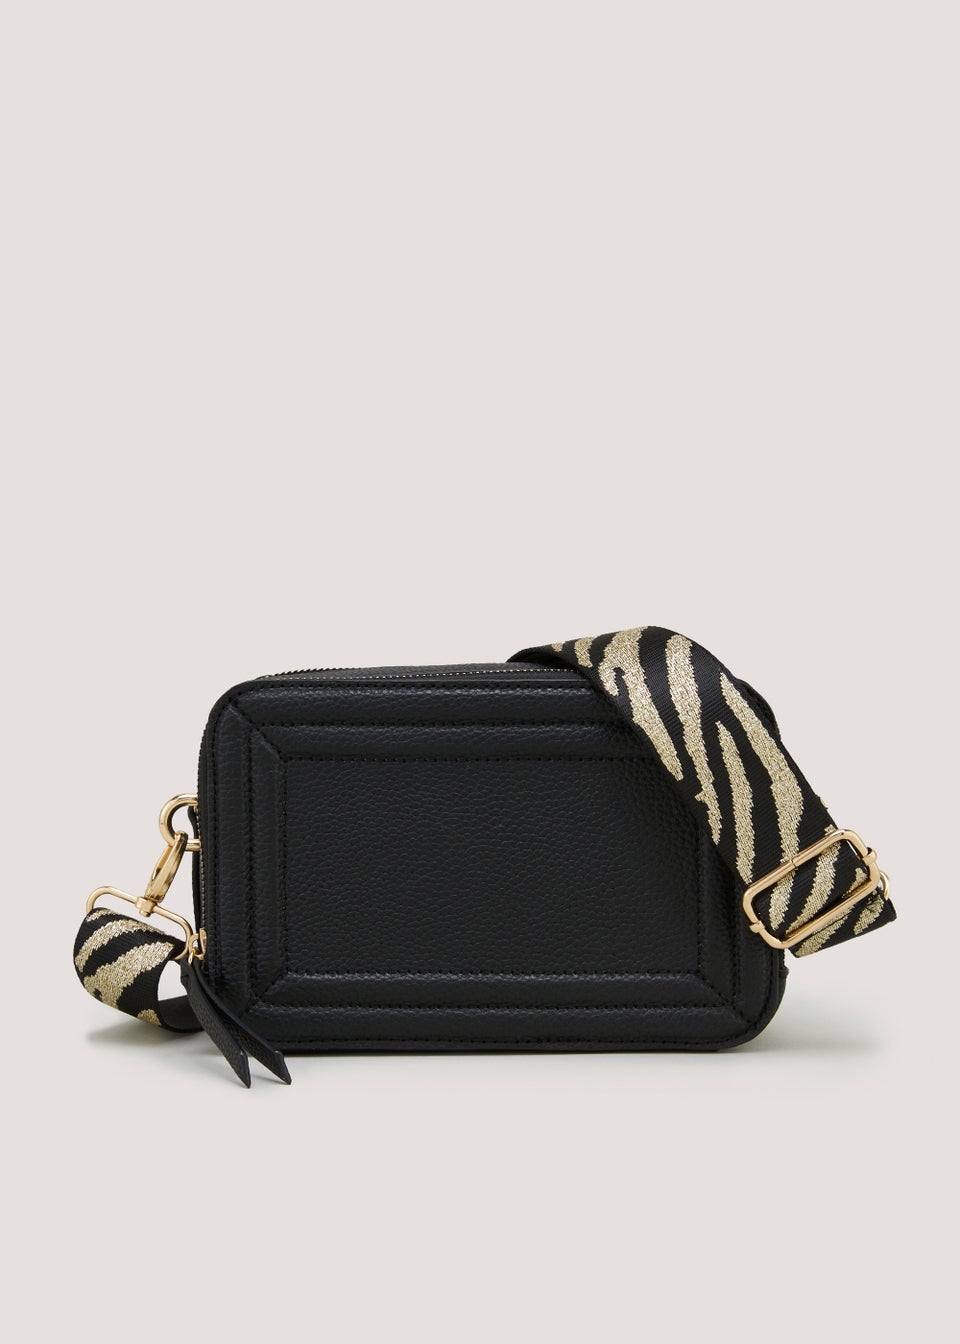 Black Zebra Print Camera Bag